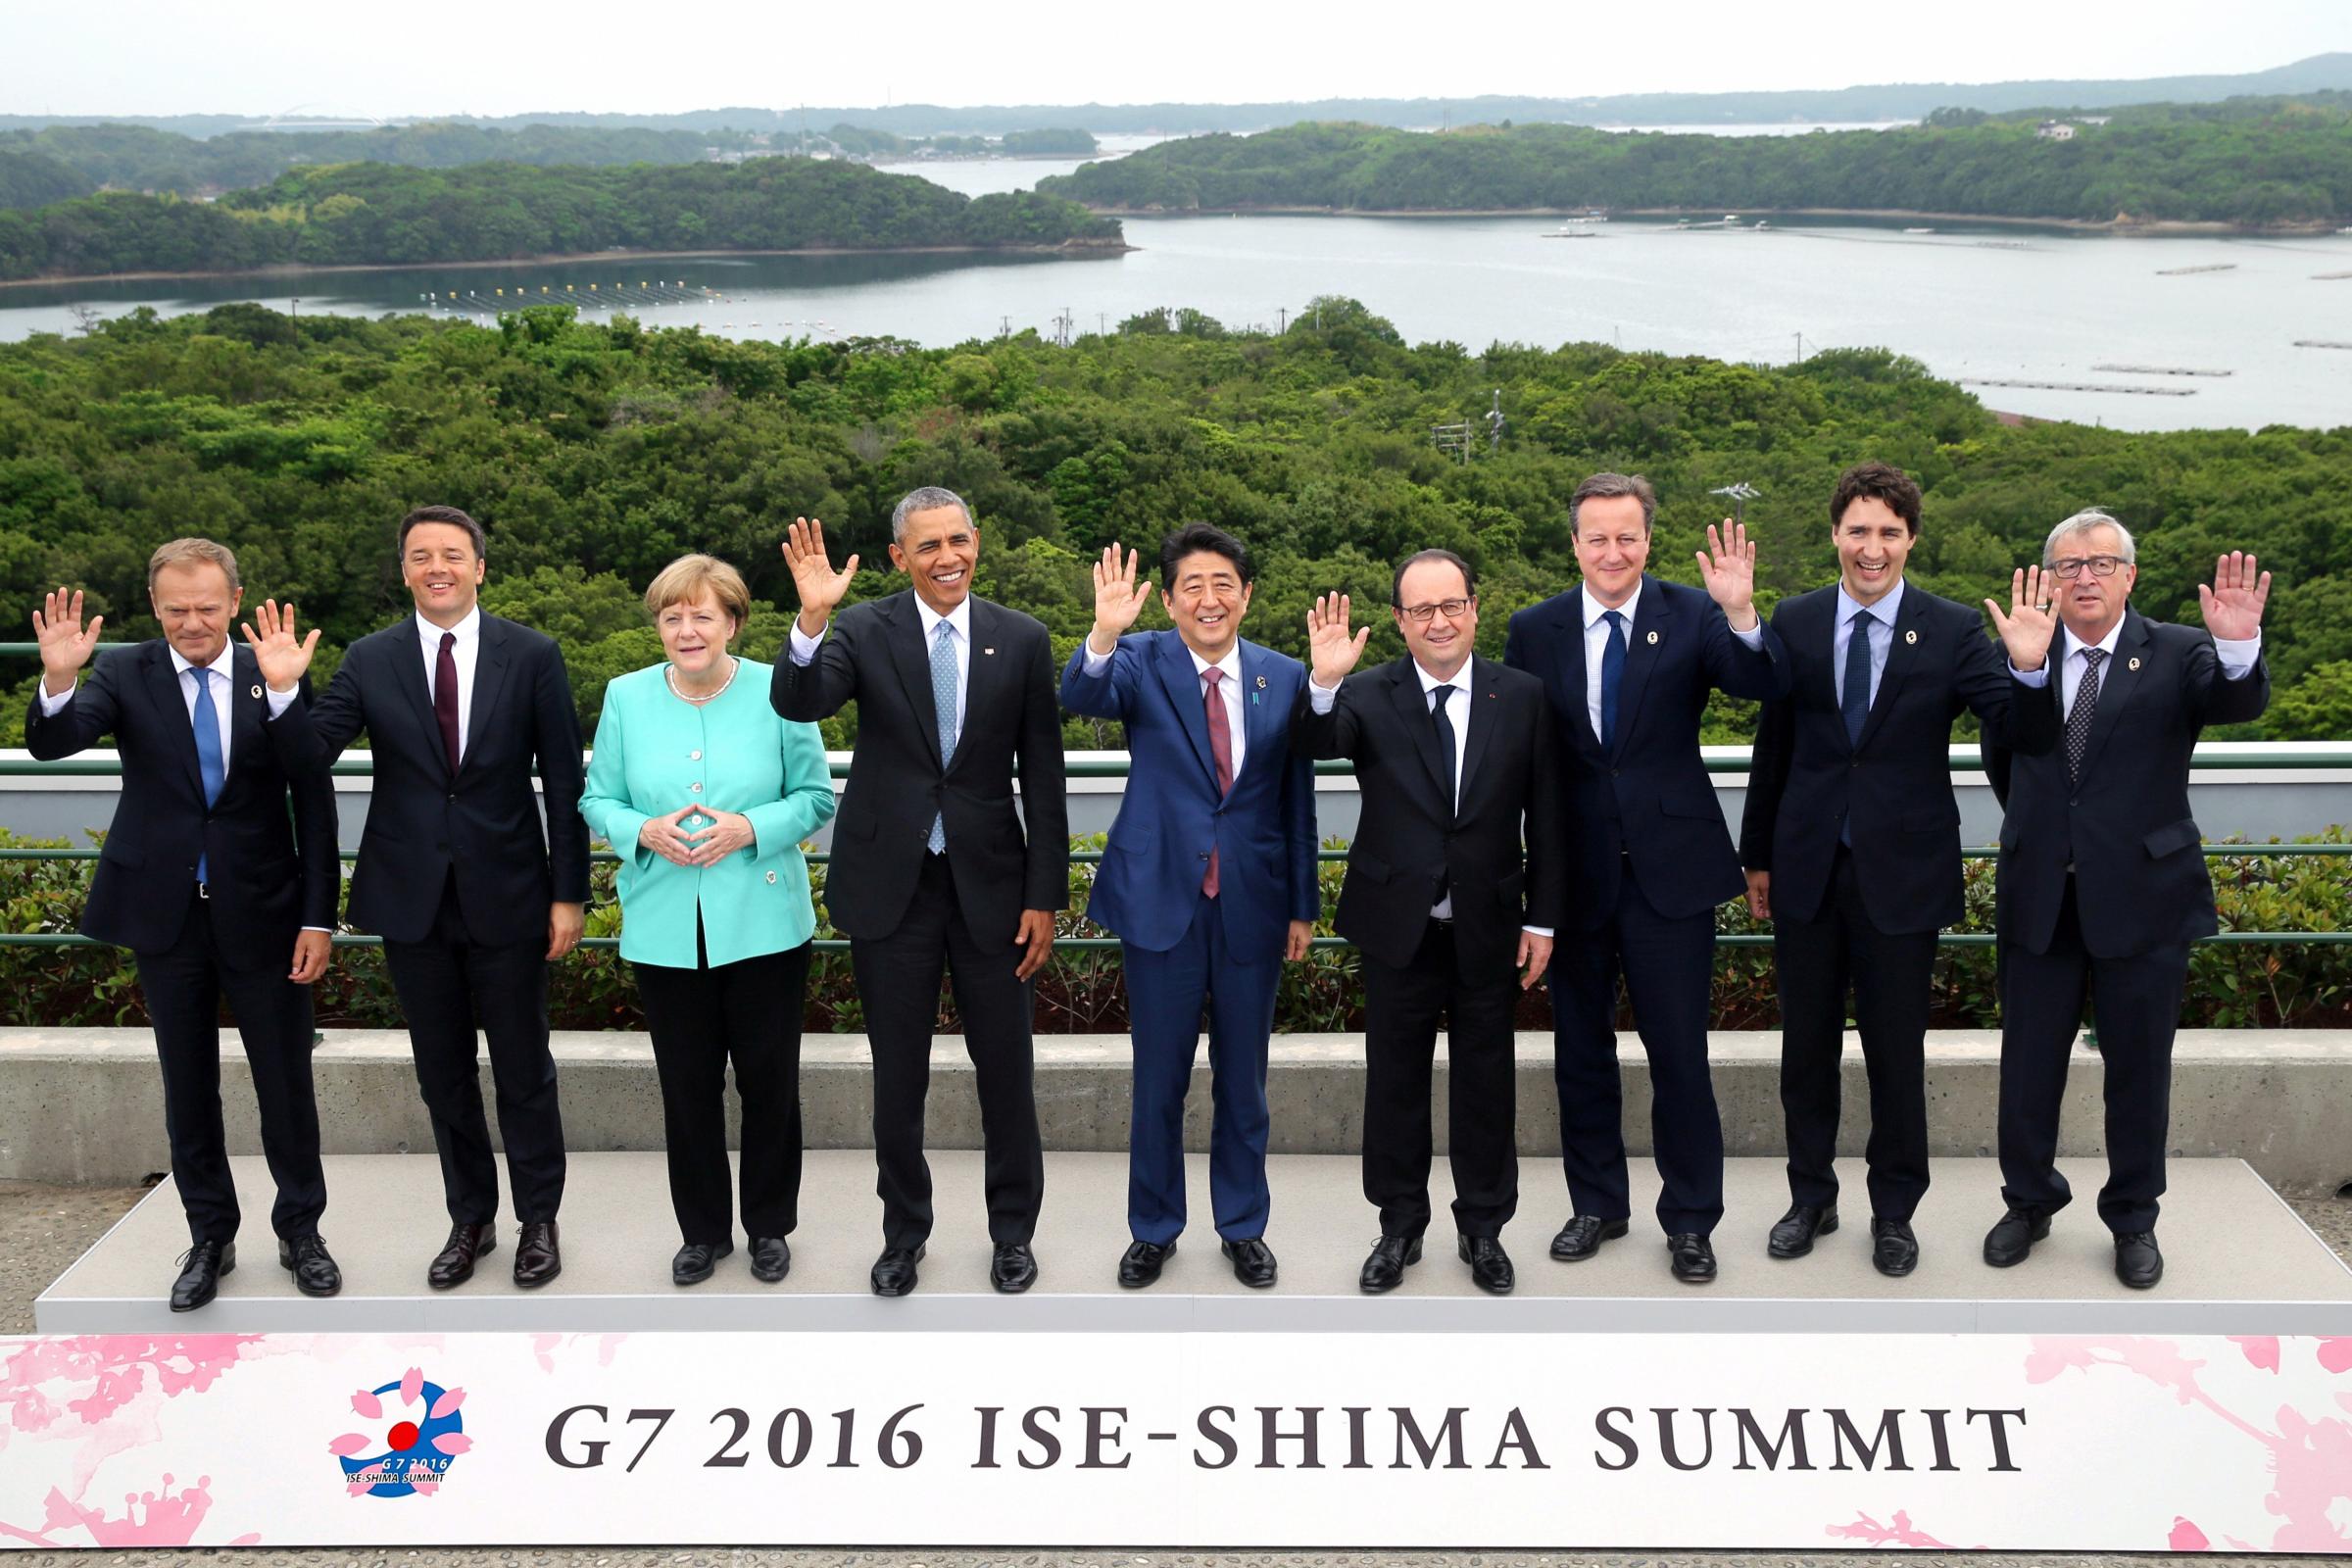 G7 Ise-Shima Summit Begins